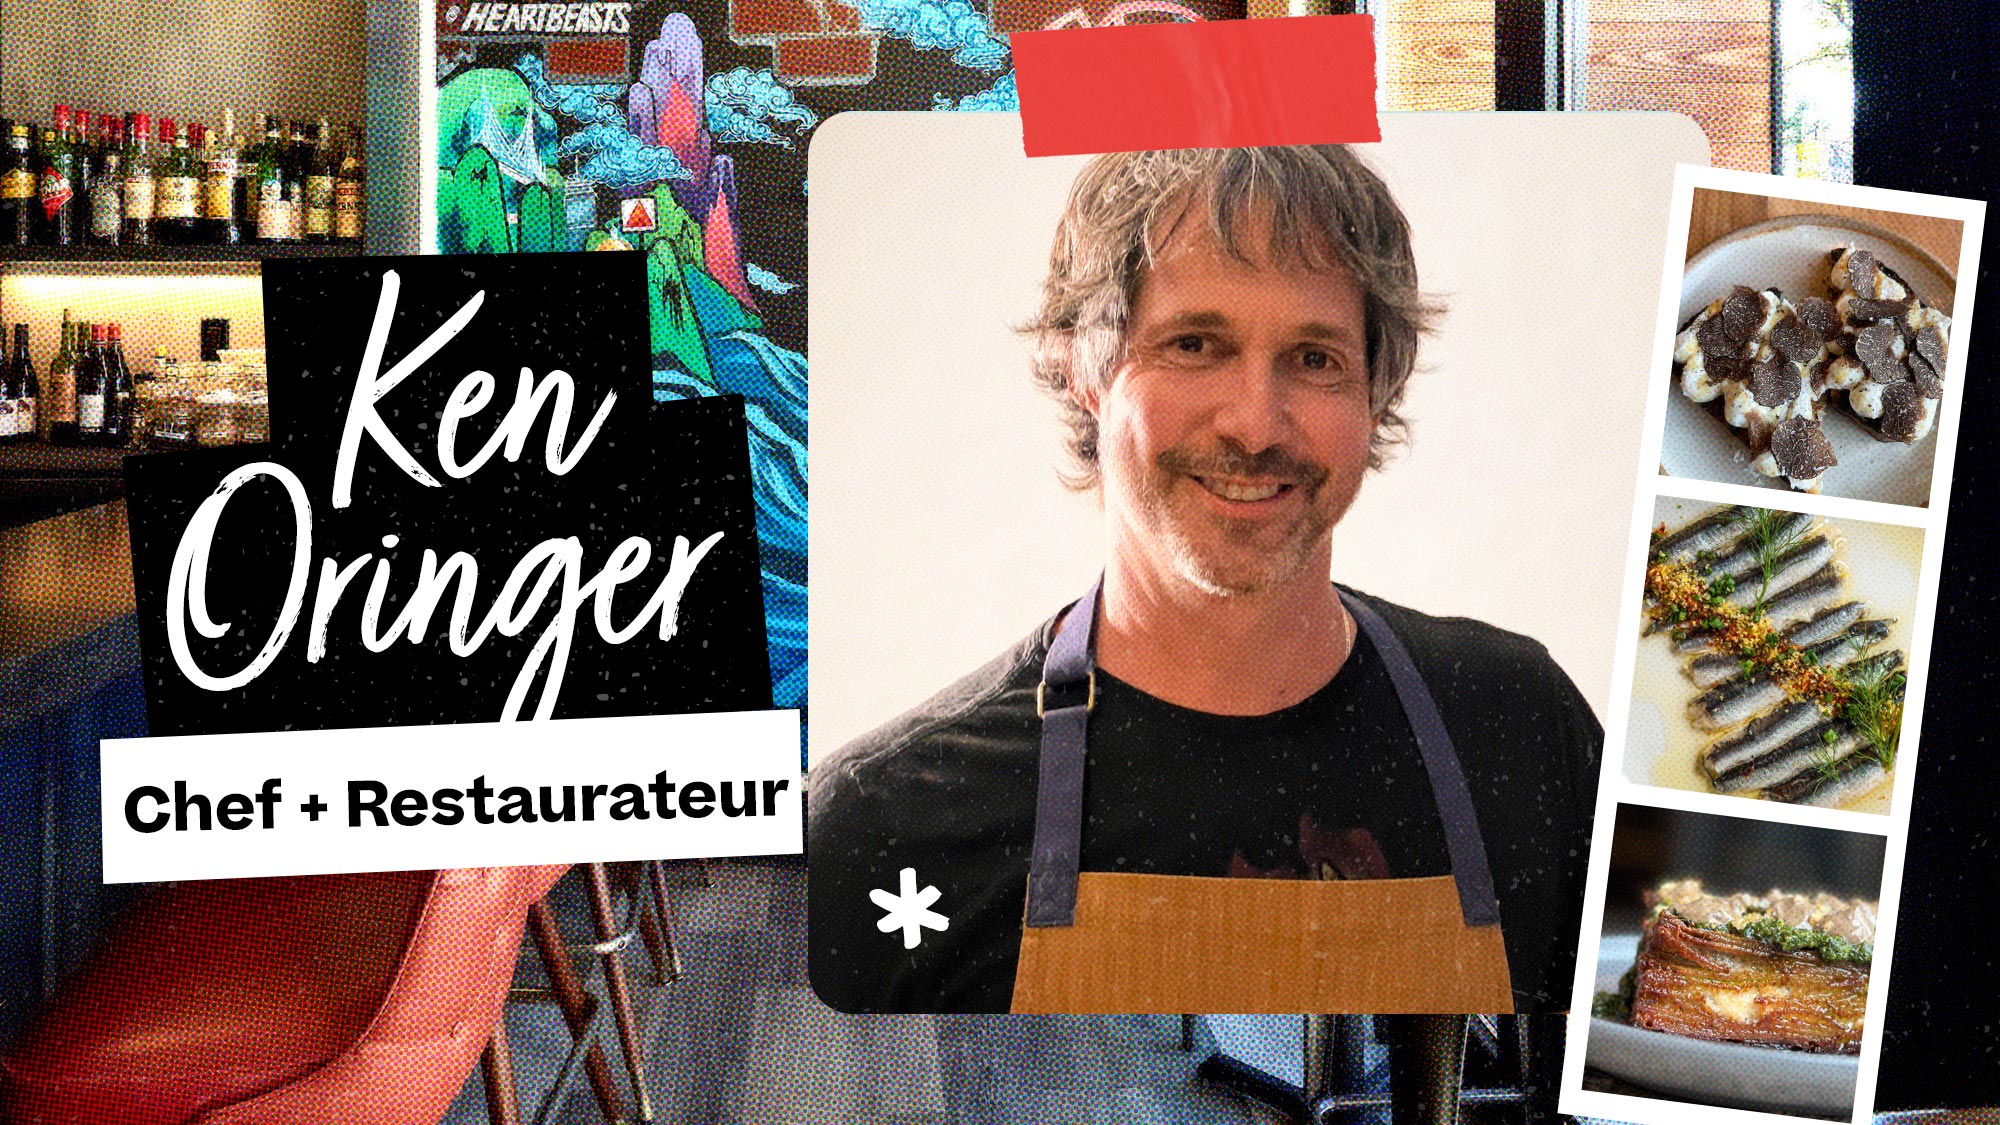 Chef and restaurateur Ken Oringer